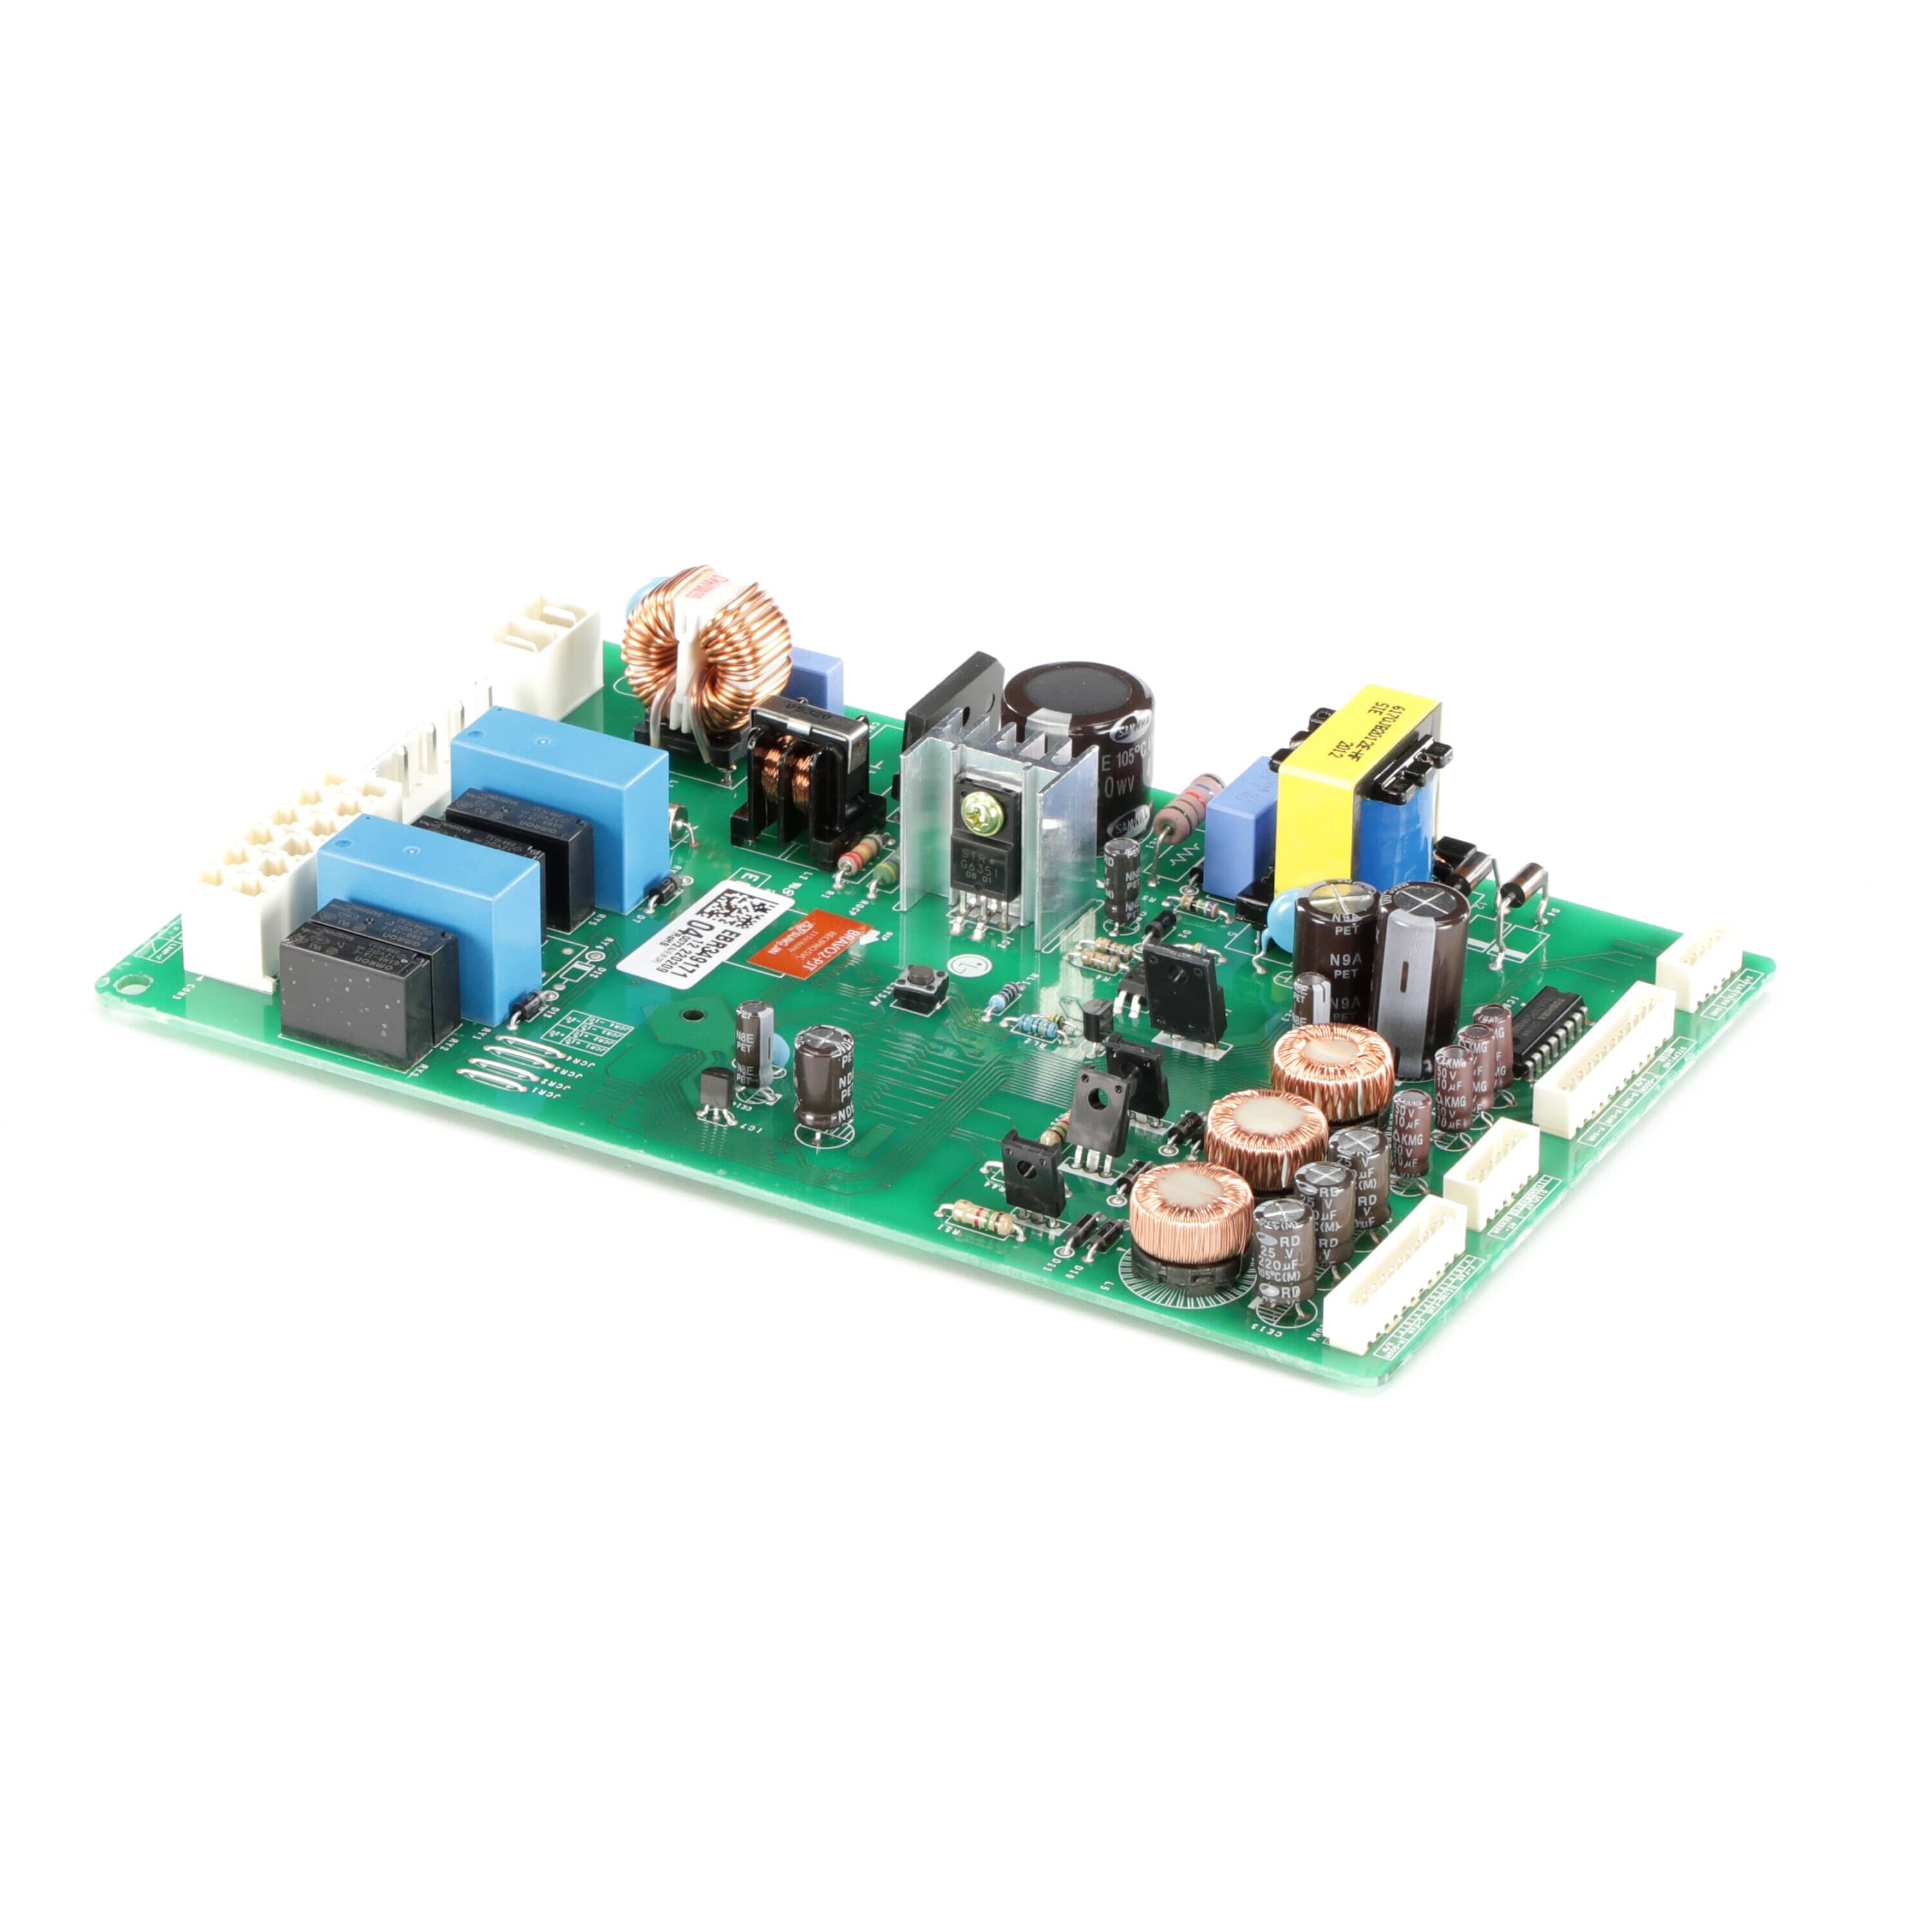 LG EBR34917104 Refrigerator Main Control Board (PCB Assembly)